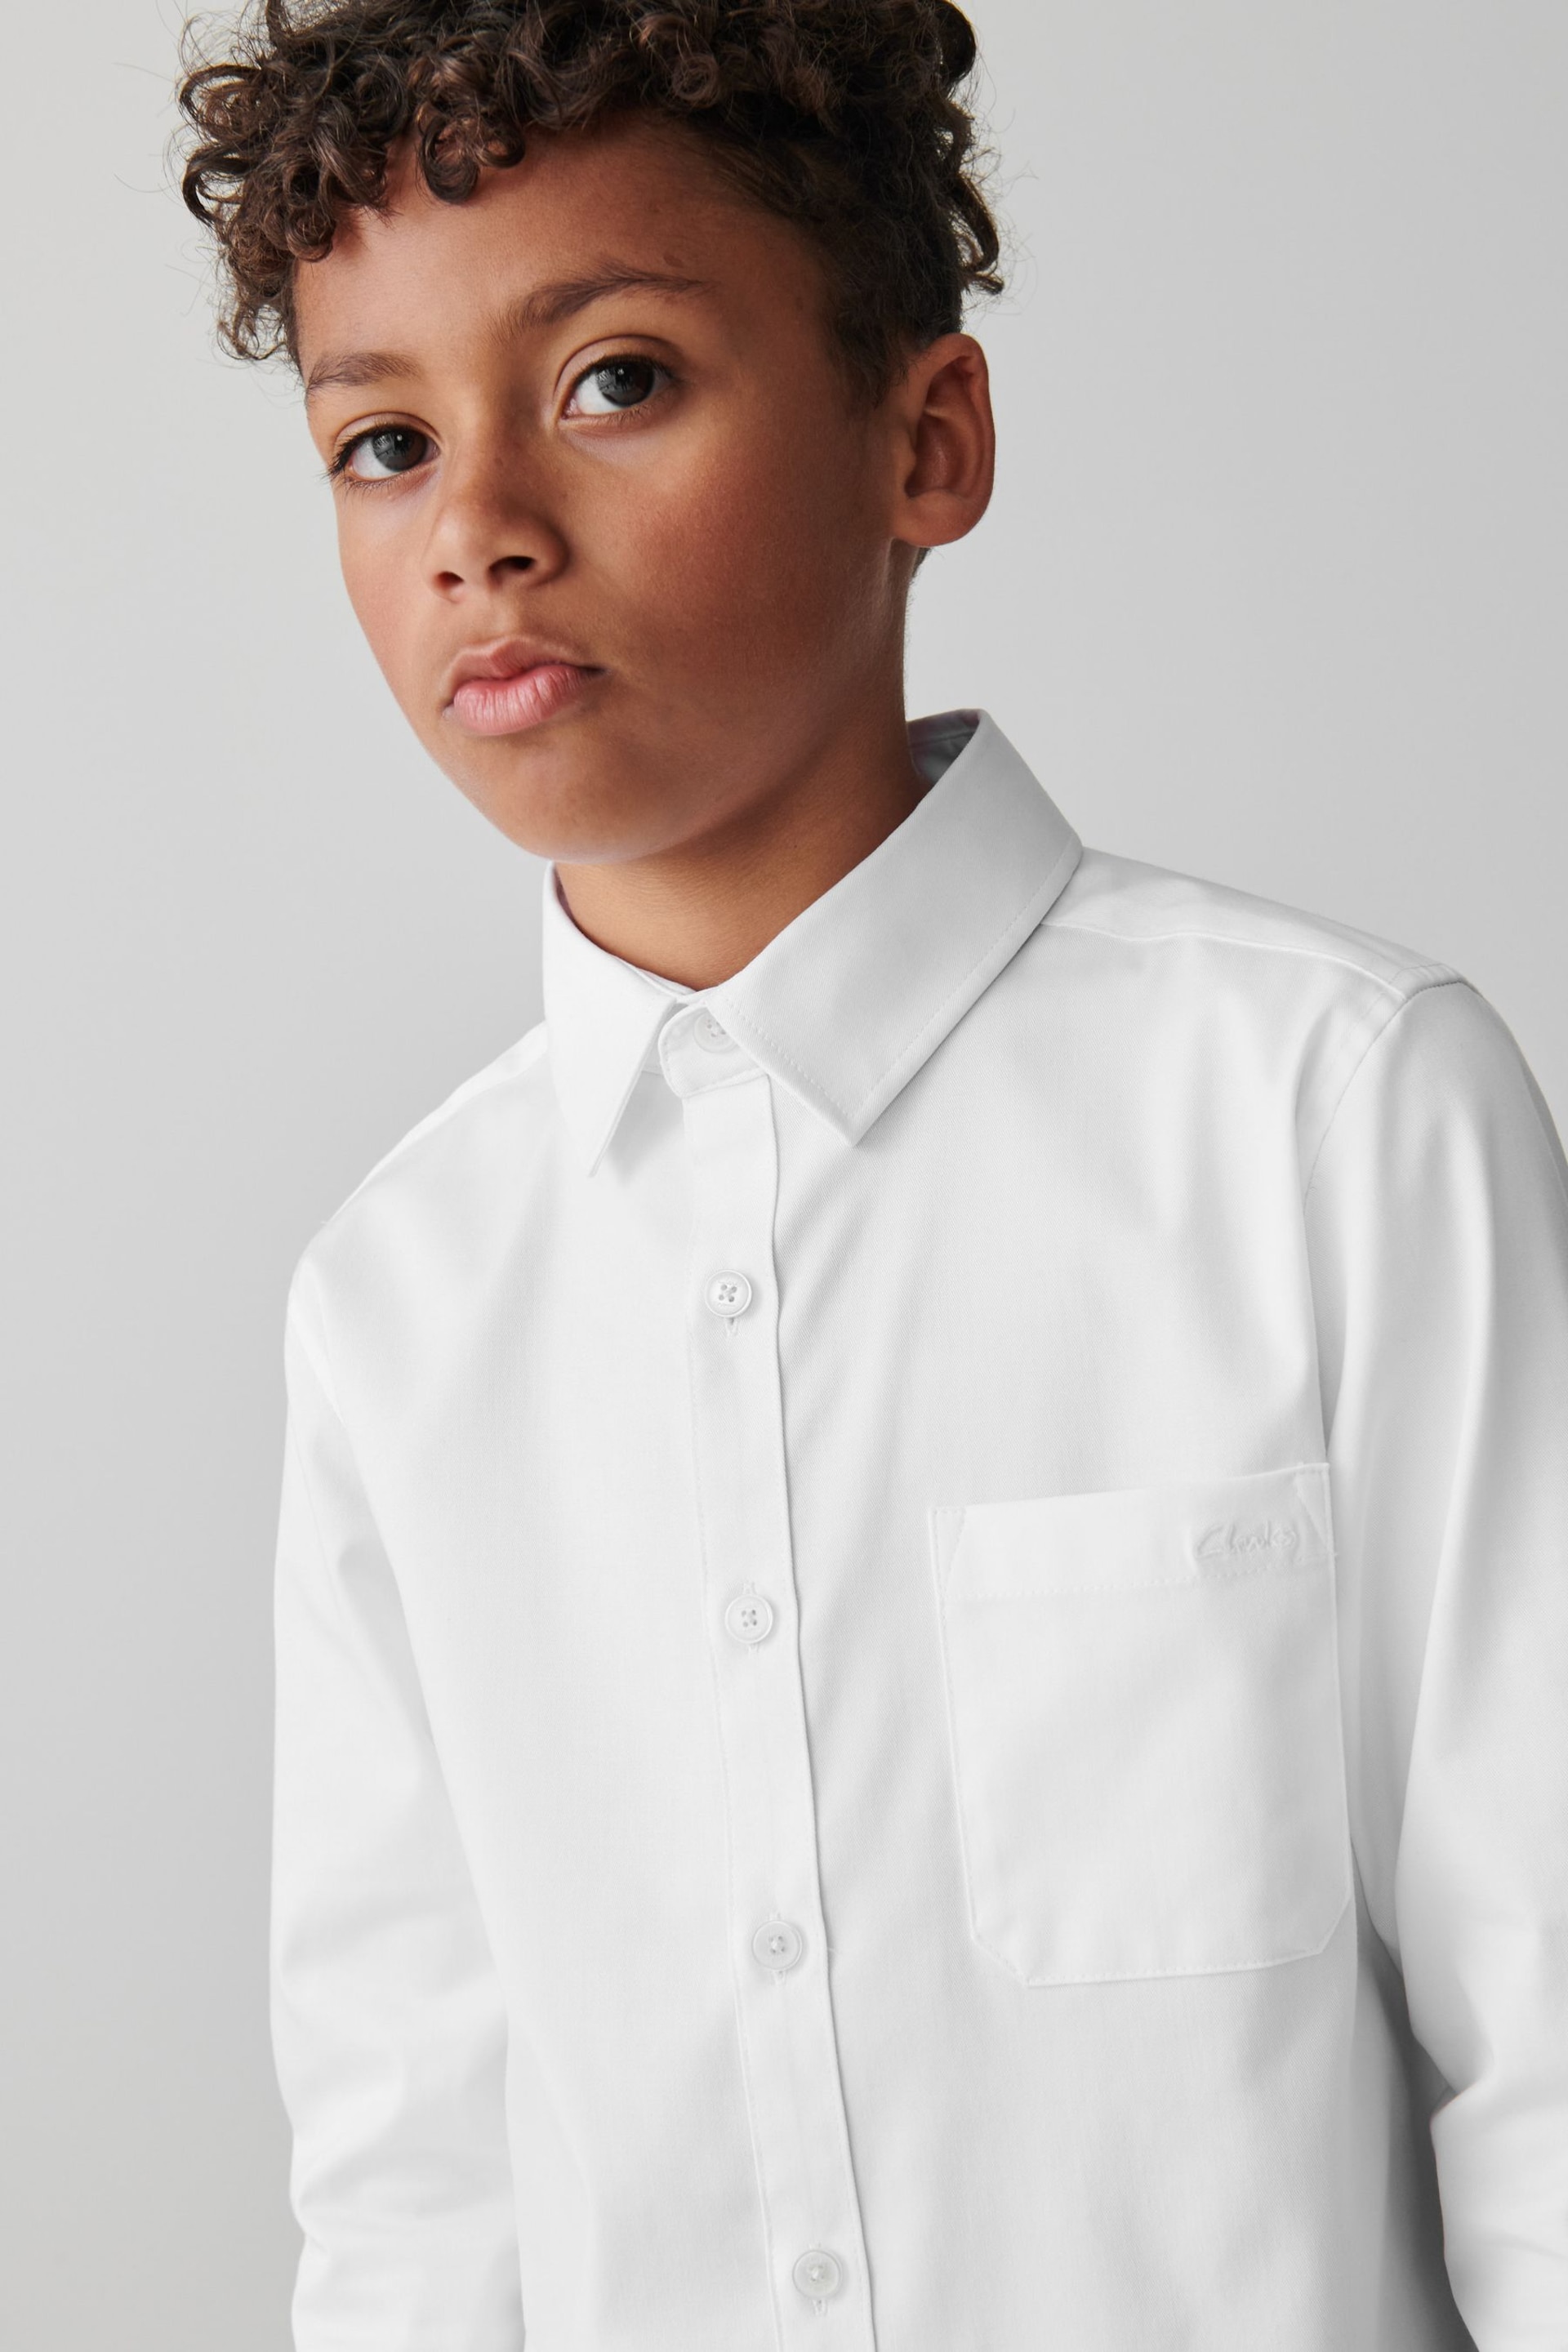 Clarks White Long Sleeve Senior Boys School Shirt with Stretch - Image 2 of 7